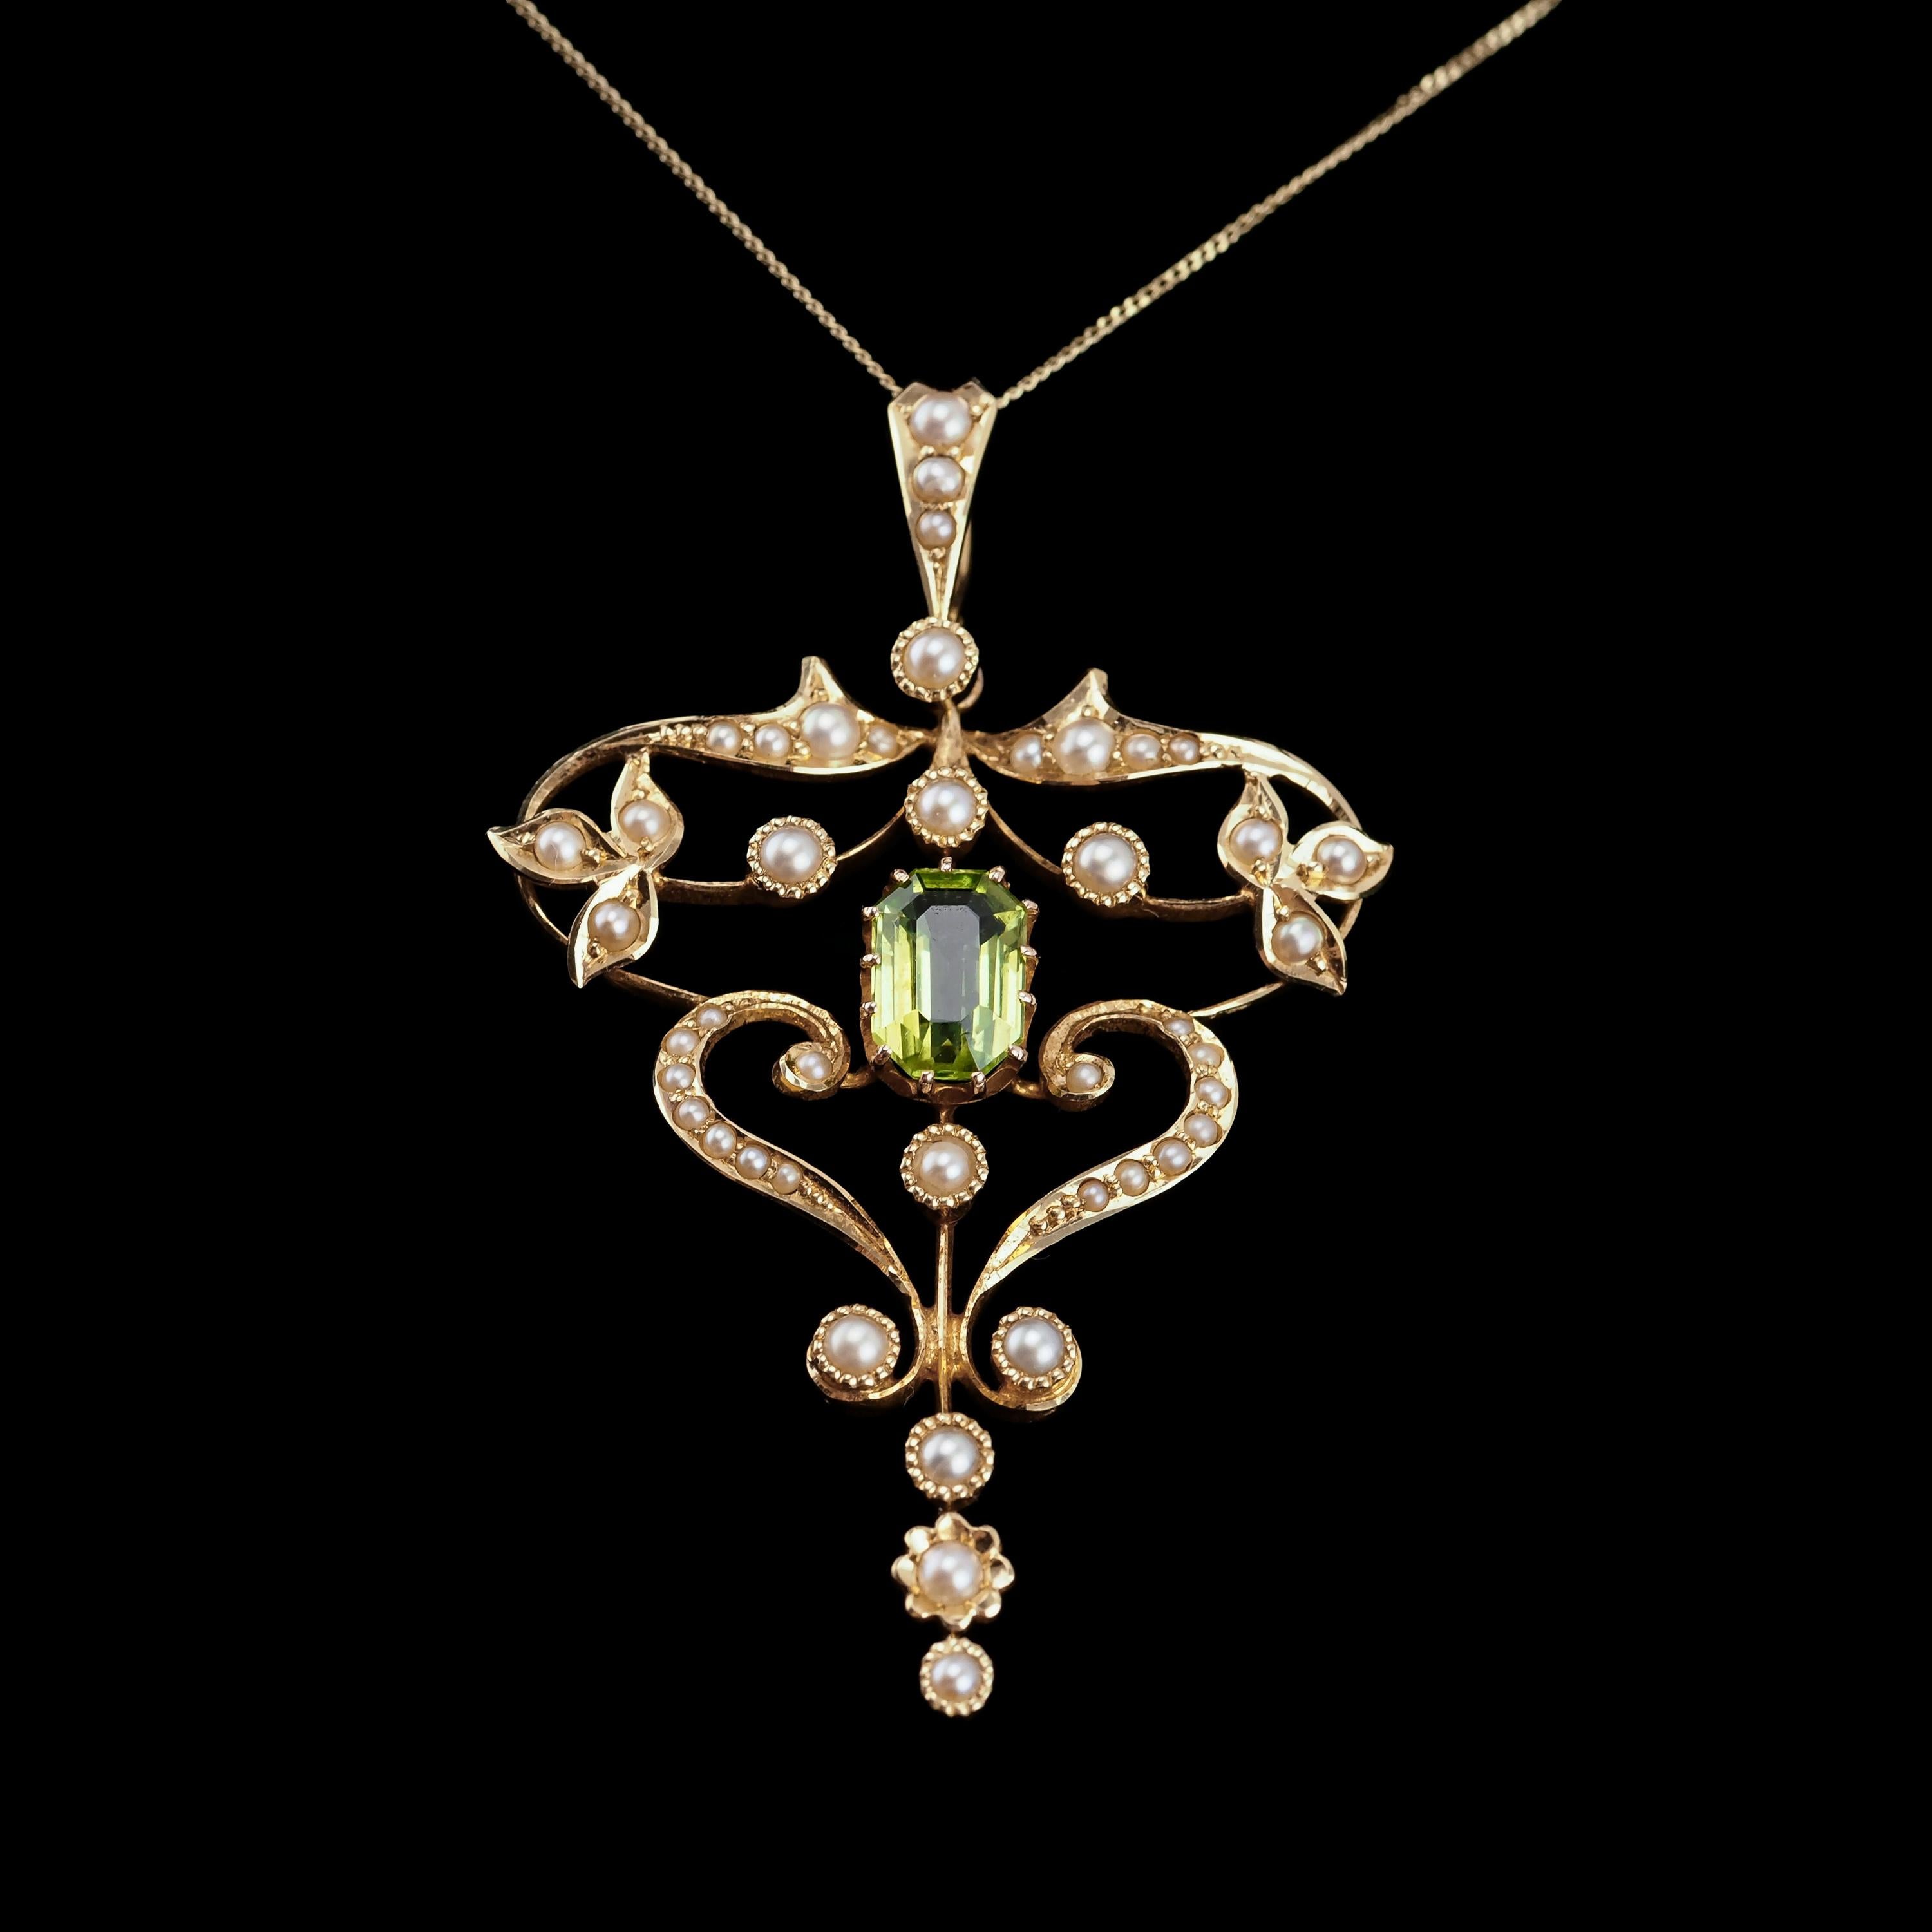 Antique Edwardian 15K Gold Peridot & Pearl Necklace/Pendant - c.1910 1